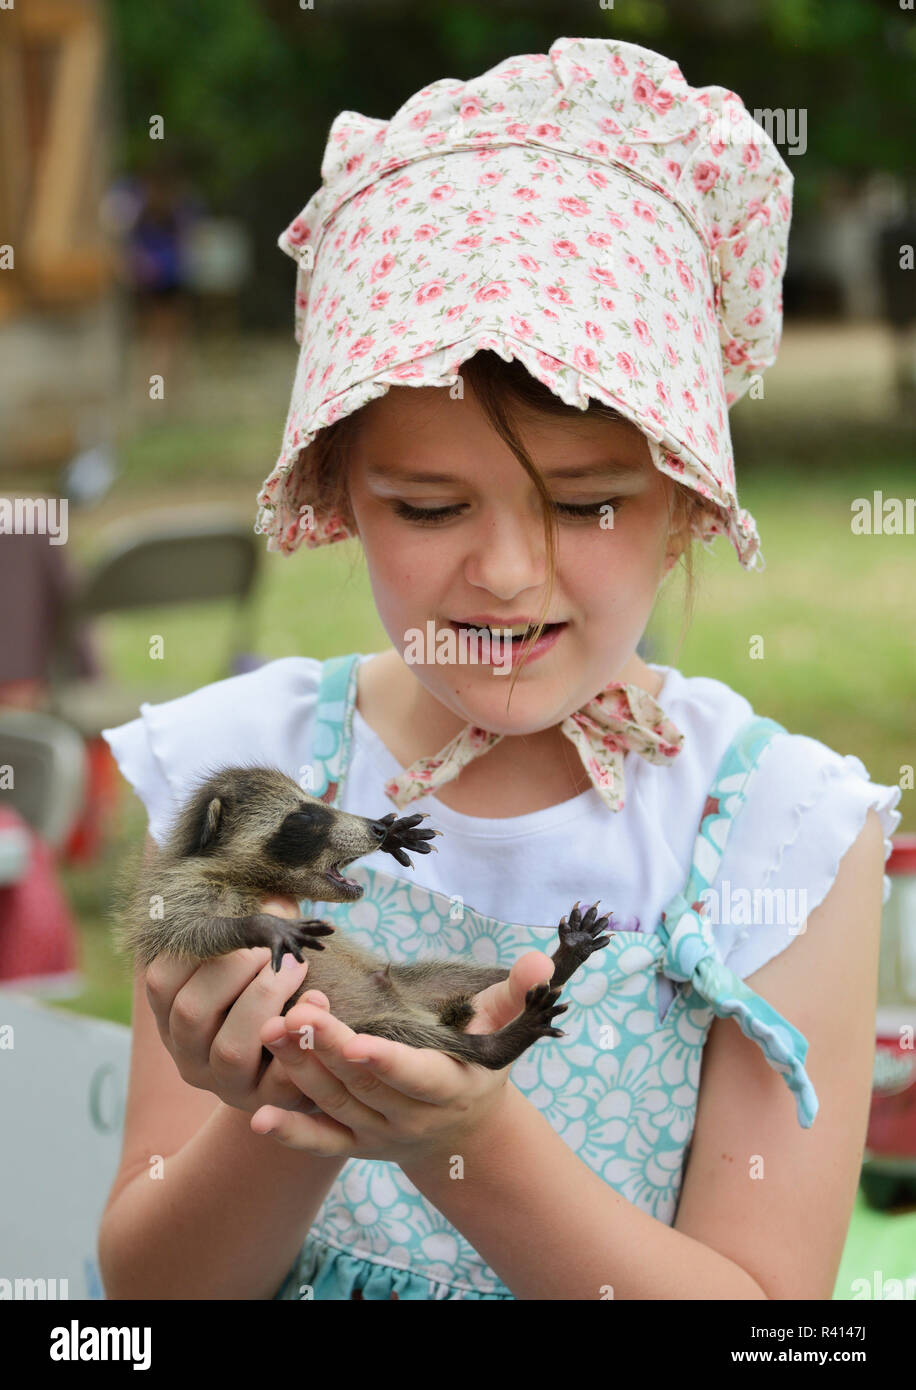 Northern Raccoon (Procyon lotor), young girl holding baby raccoon, Texas, USA Stock Photo